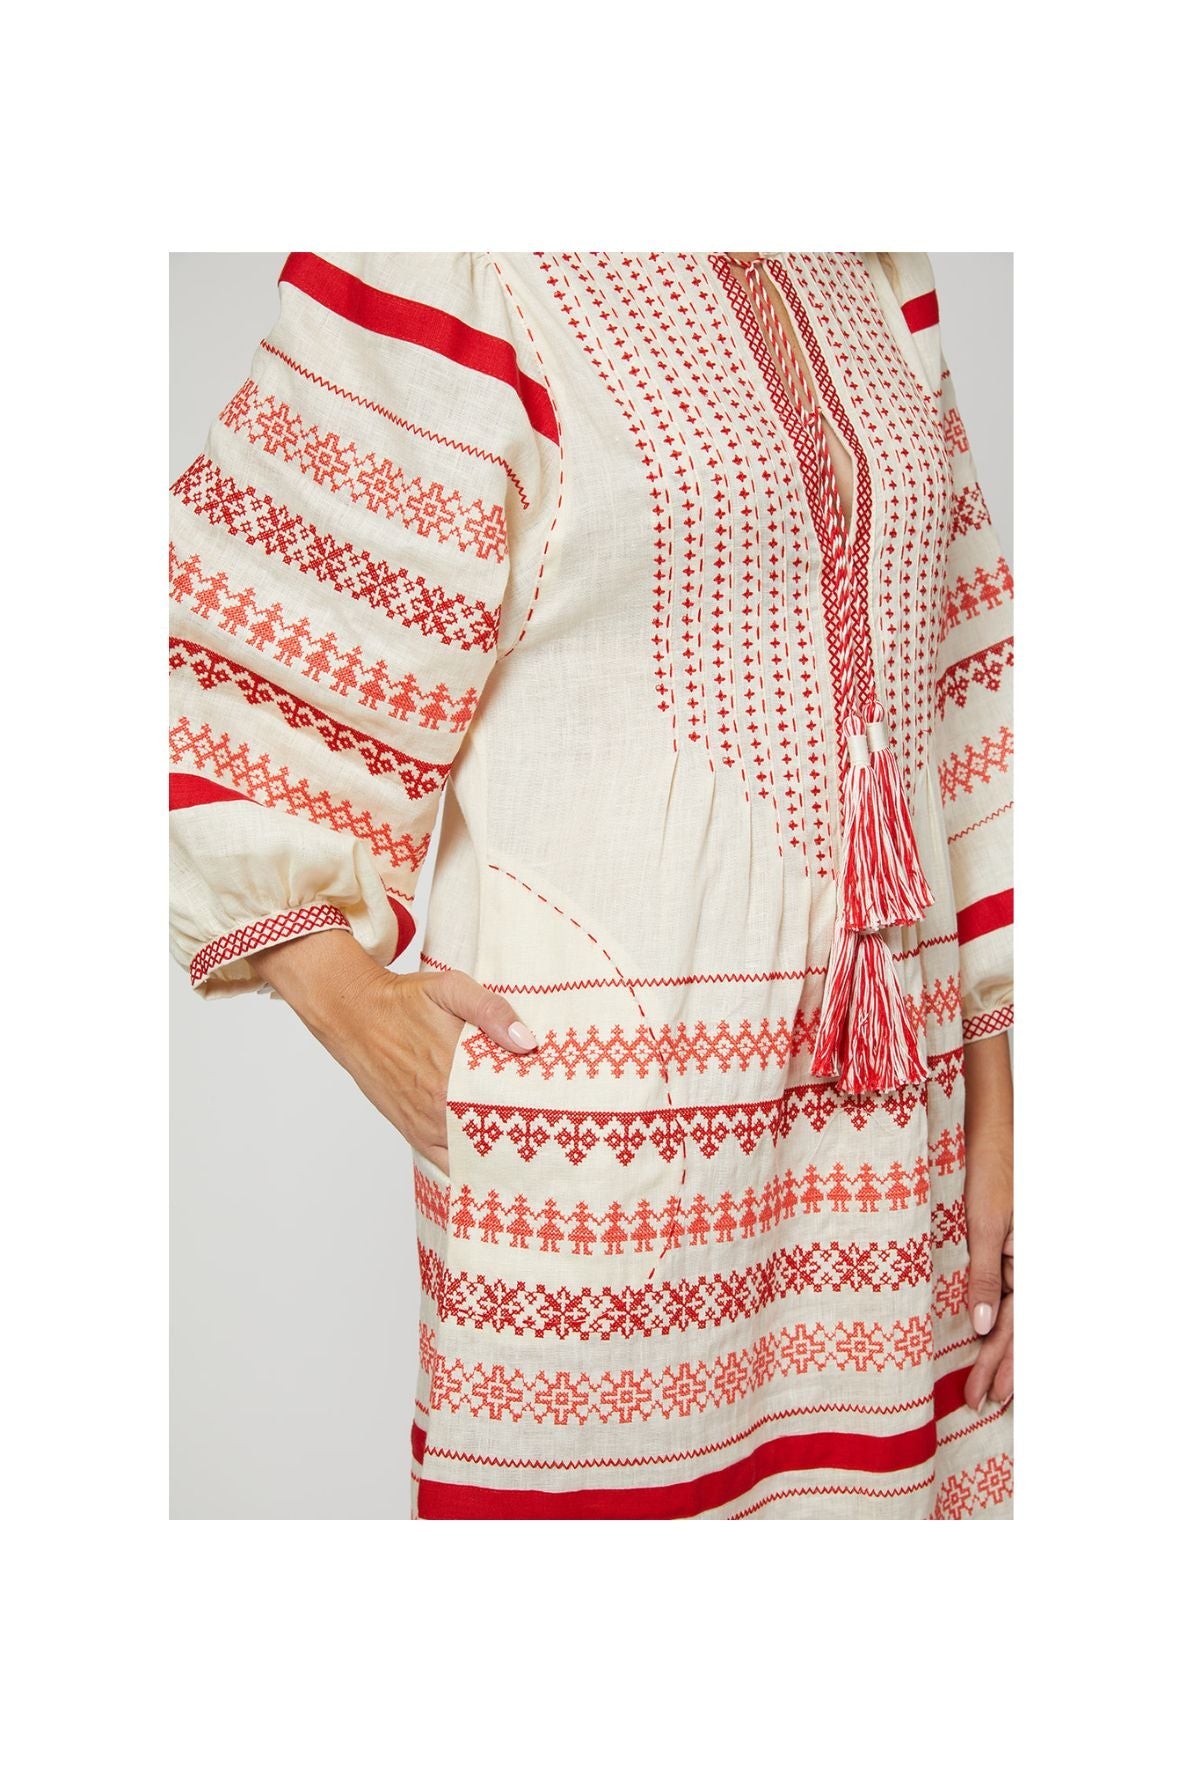 Kateryna Embroidered Ukrainian Dress - Ivory, Red by Larkin Lane